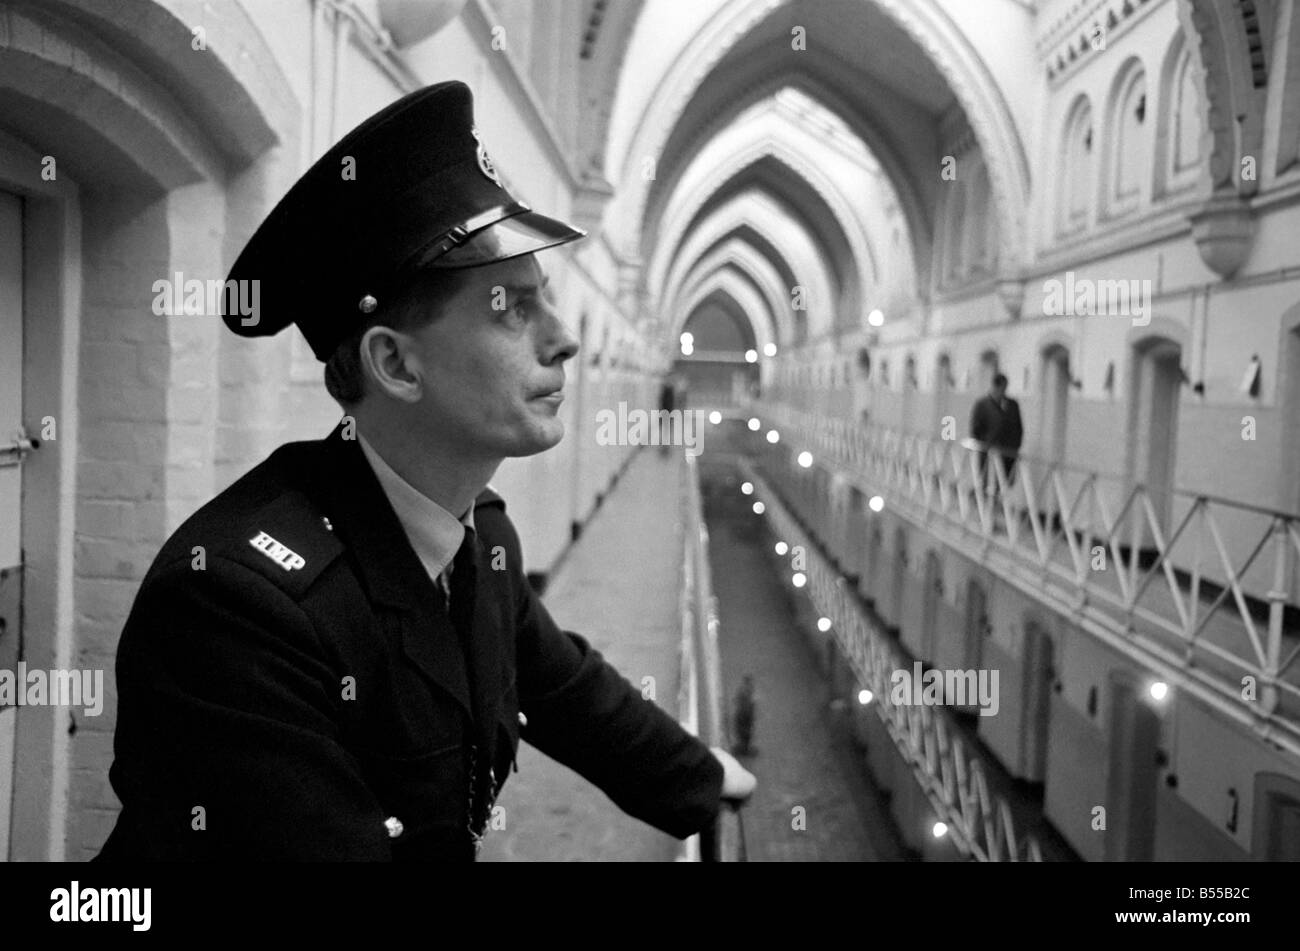 Crime Prisons: Prison Officer John Gaynor at work in Strangeways Jail, Manchester. November 1969 Z12020-007 Stock Photo